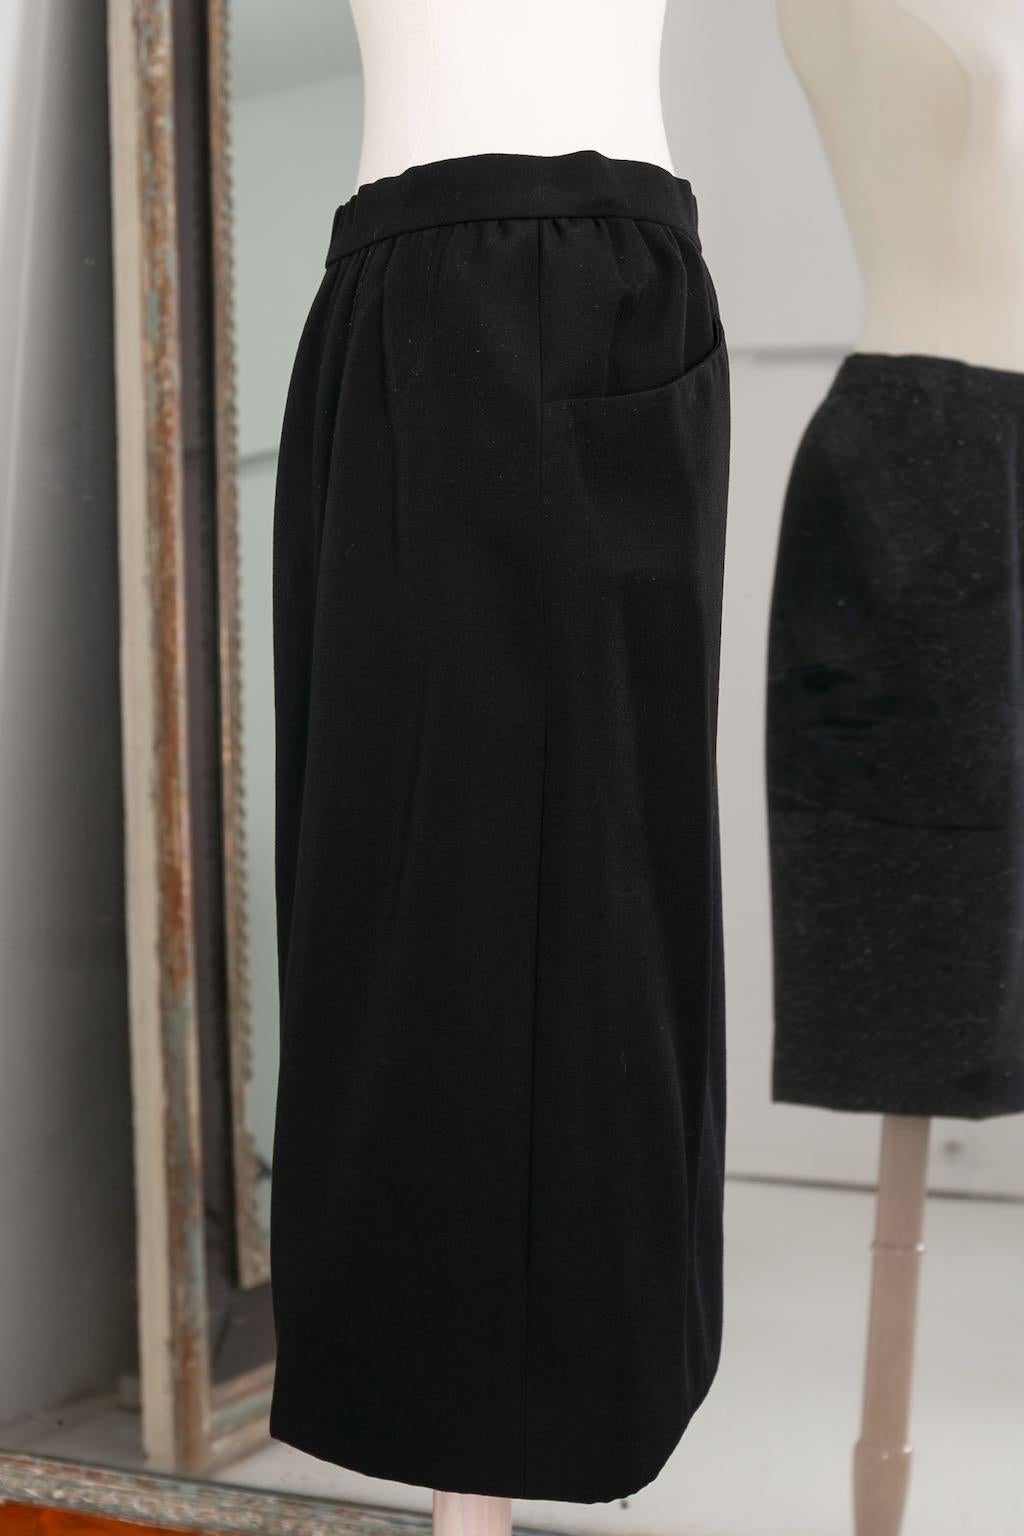 Yves Saint Laurent Haute Couture Black Skirt and Jacket Set, circa 1981/1982 6